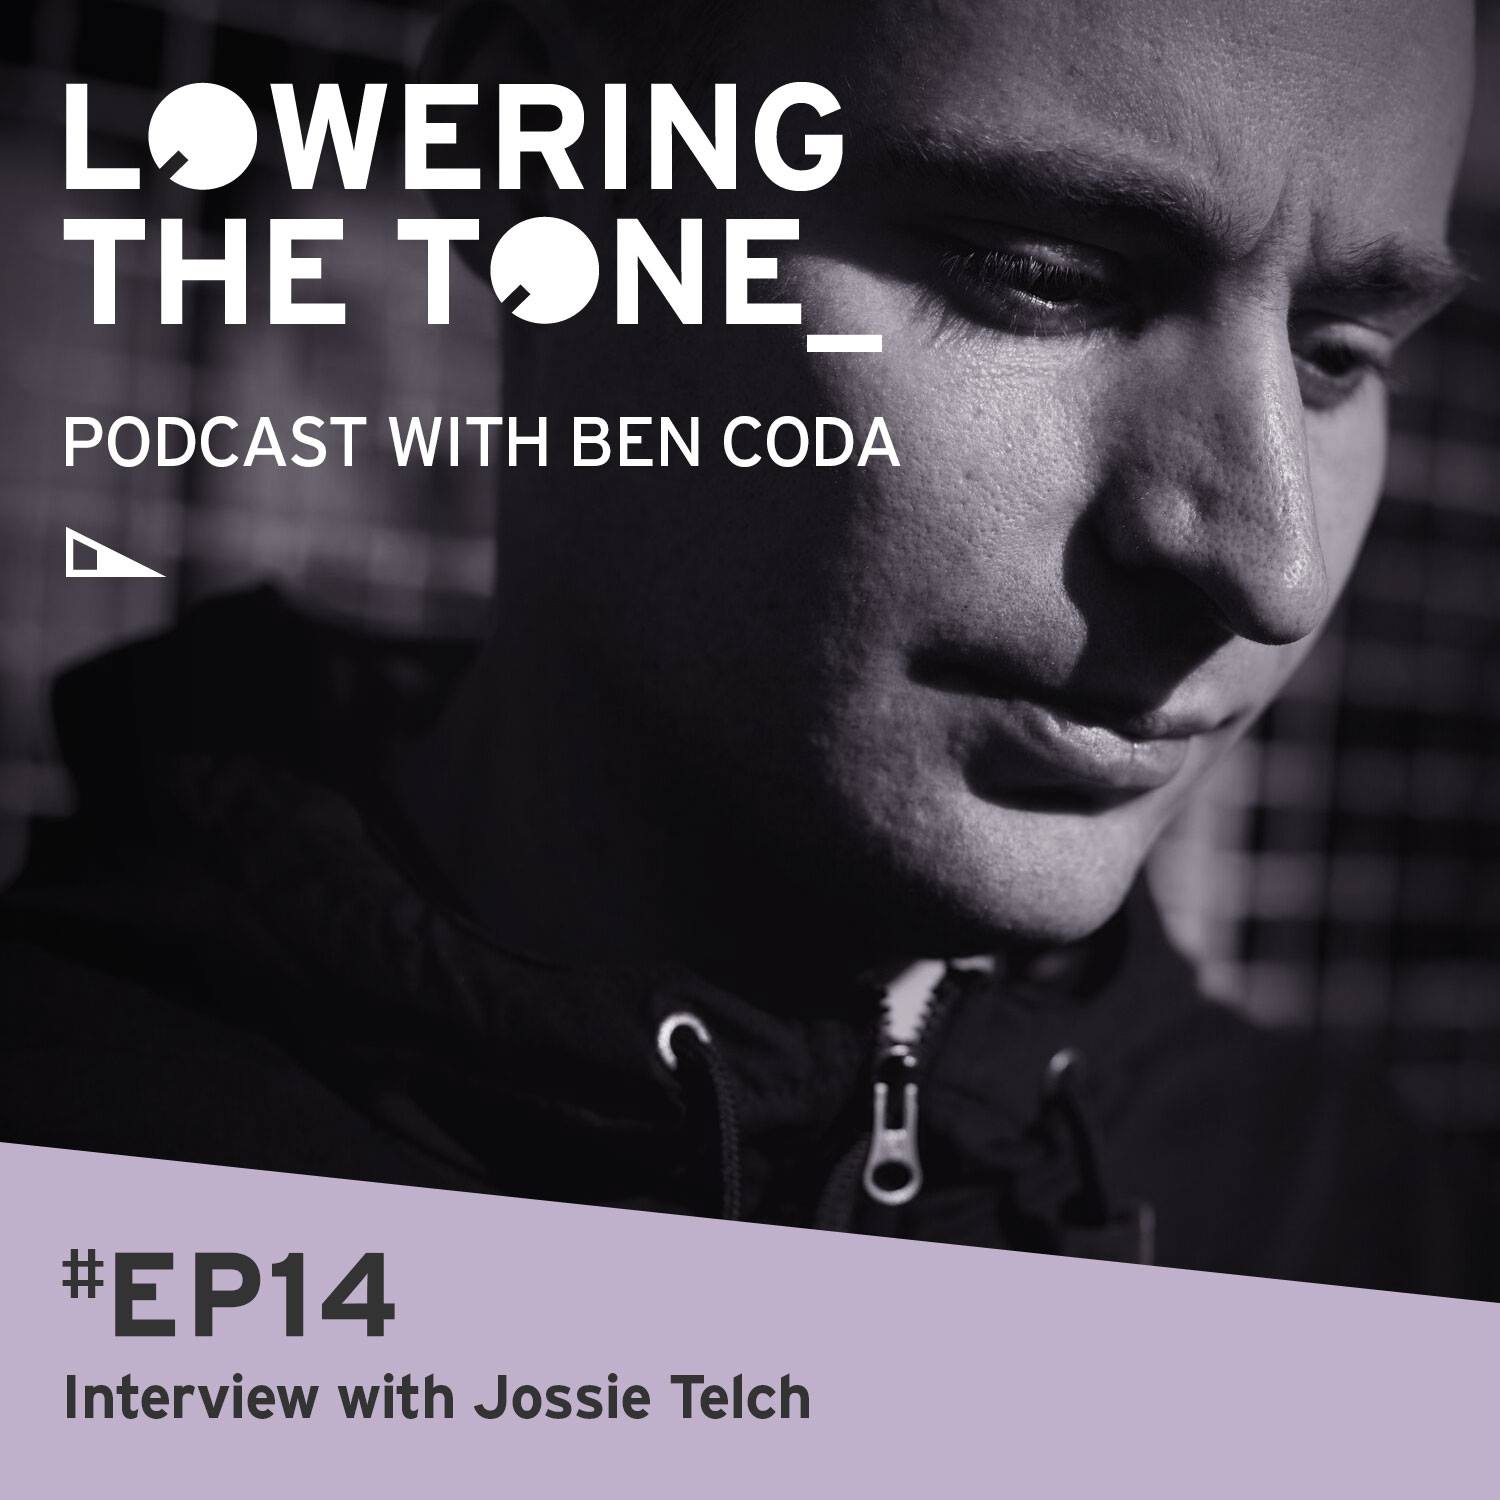 Ben Coda - Lowering The Tone Episode 14 (With Jossie Telch Interview)